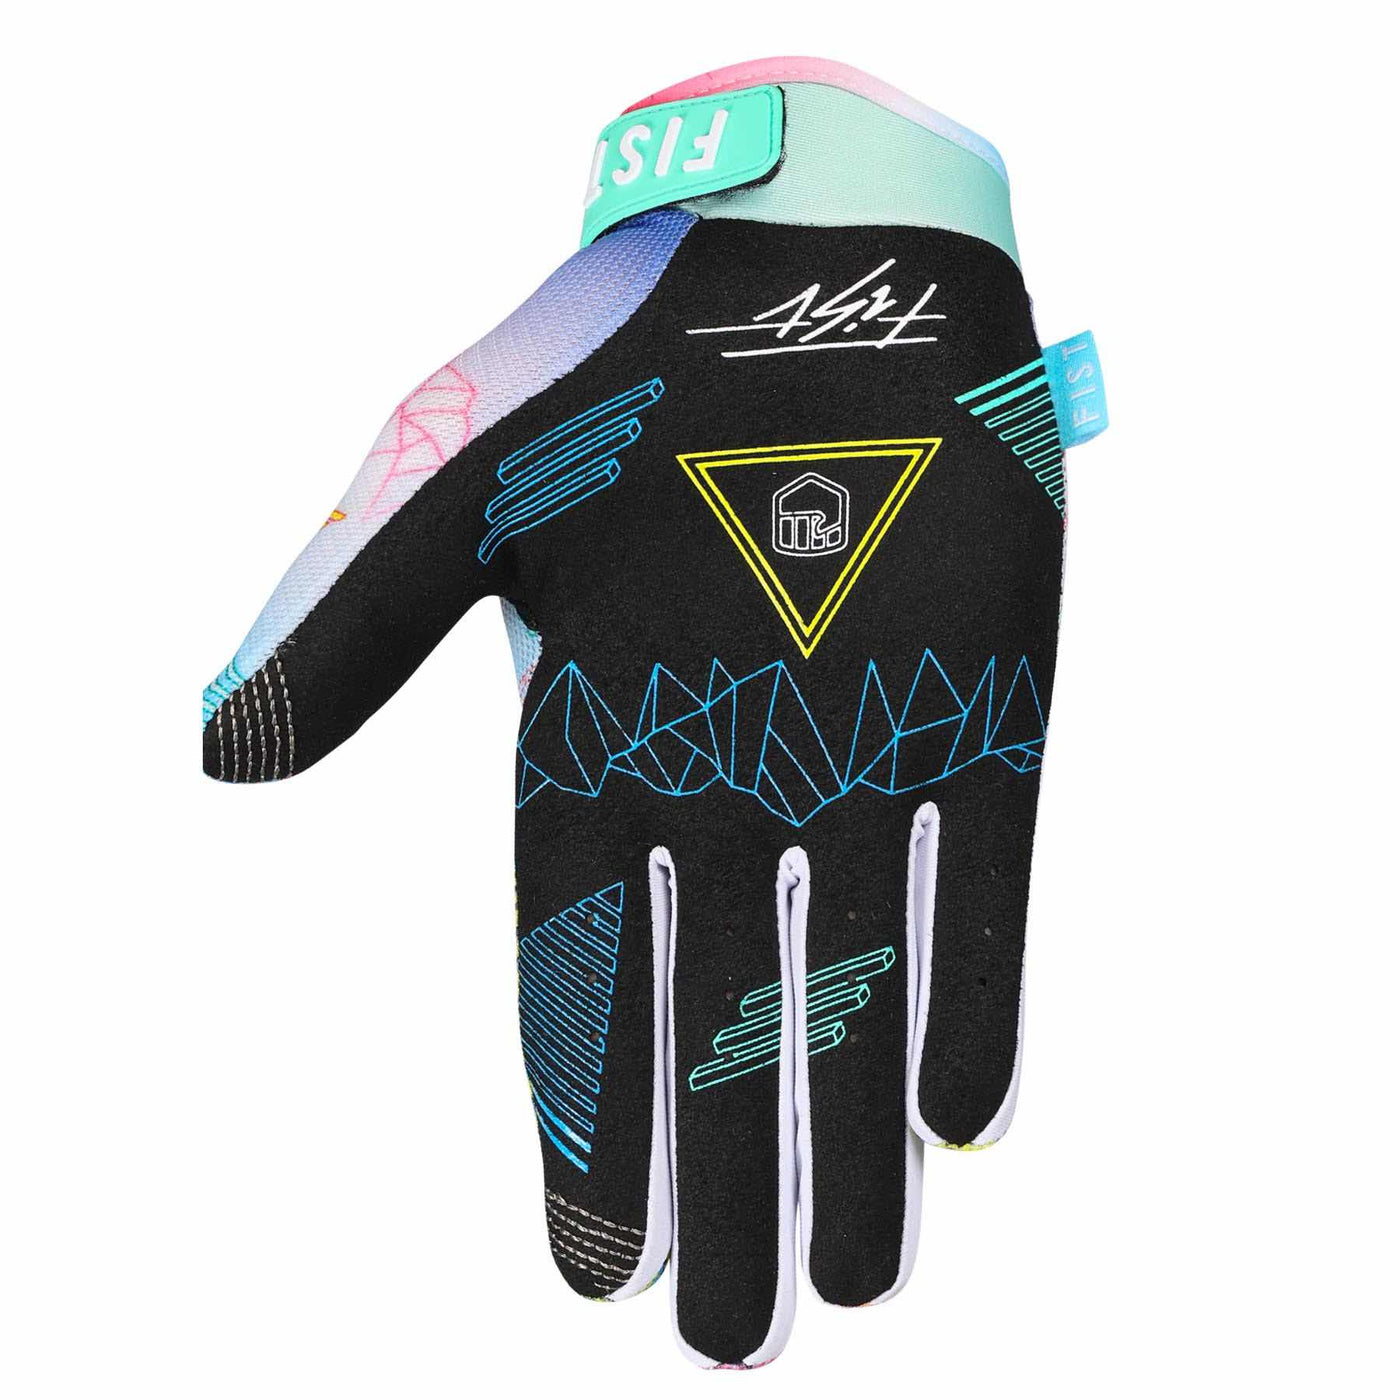 FIST Hot Weather Gloves Breezer - Shape Shifter palm | 8Lines.eu - Next day shipping, Best Offers